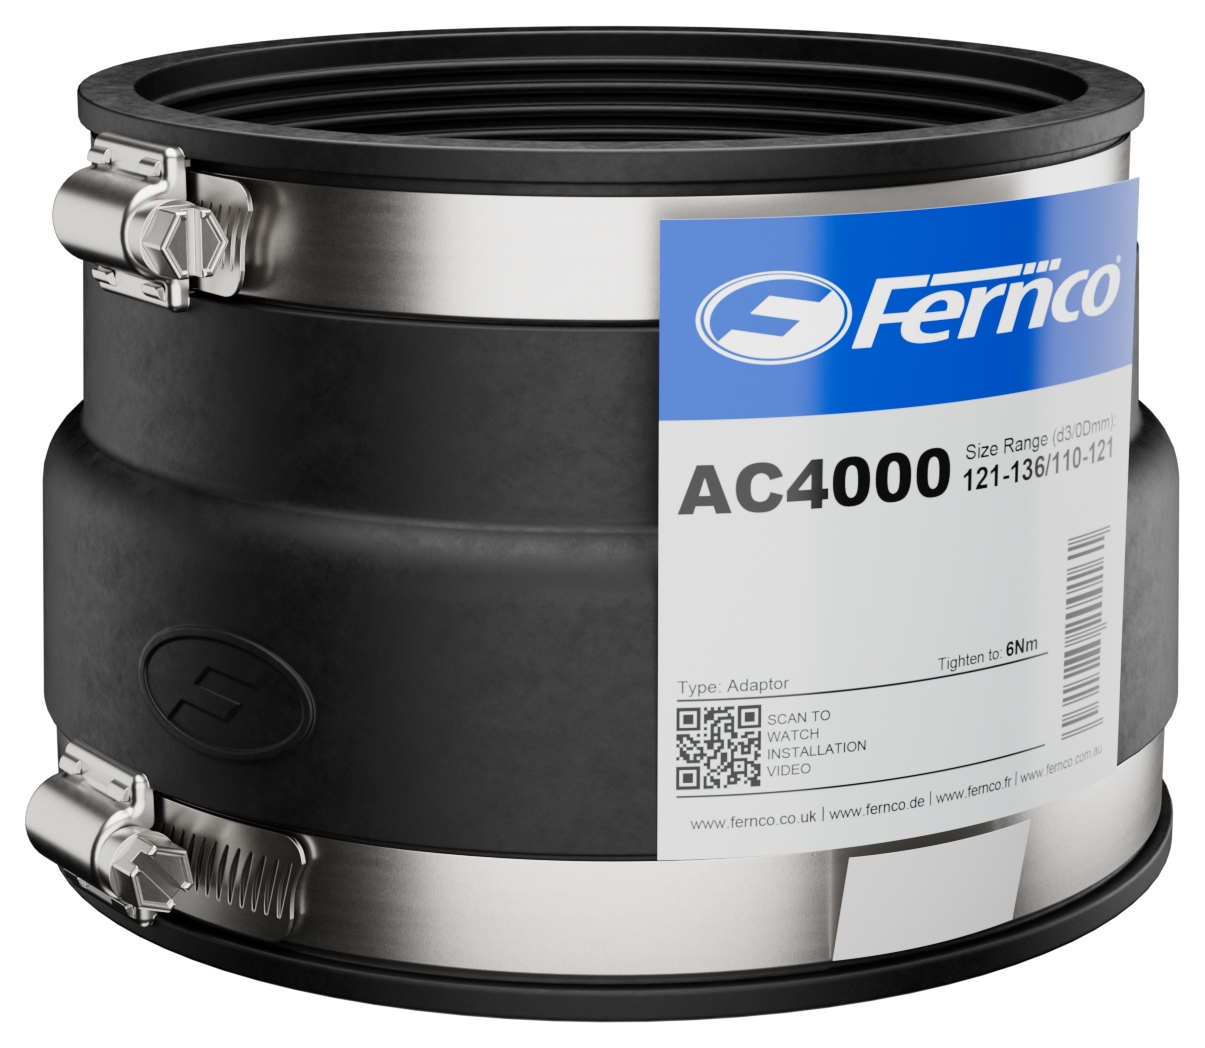 Fernco Adaptor Coupling 121-136/110-121mm